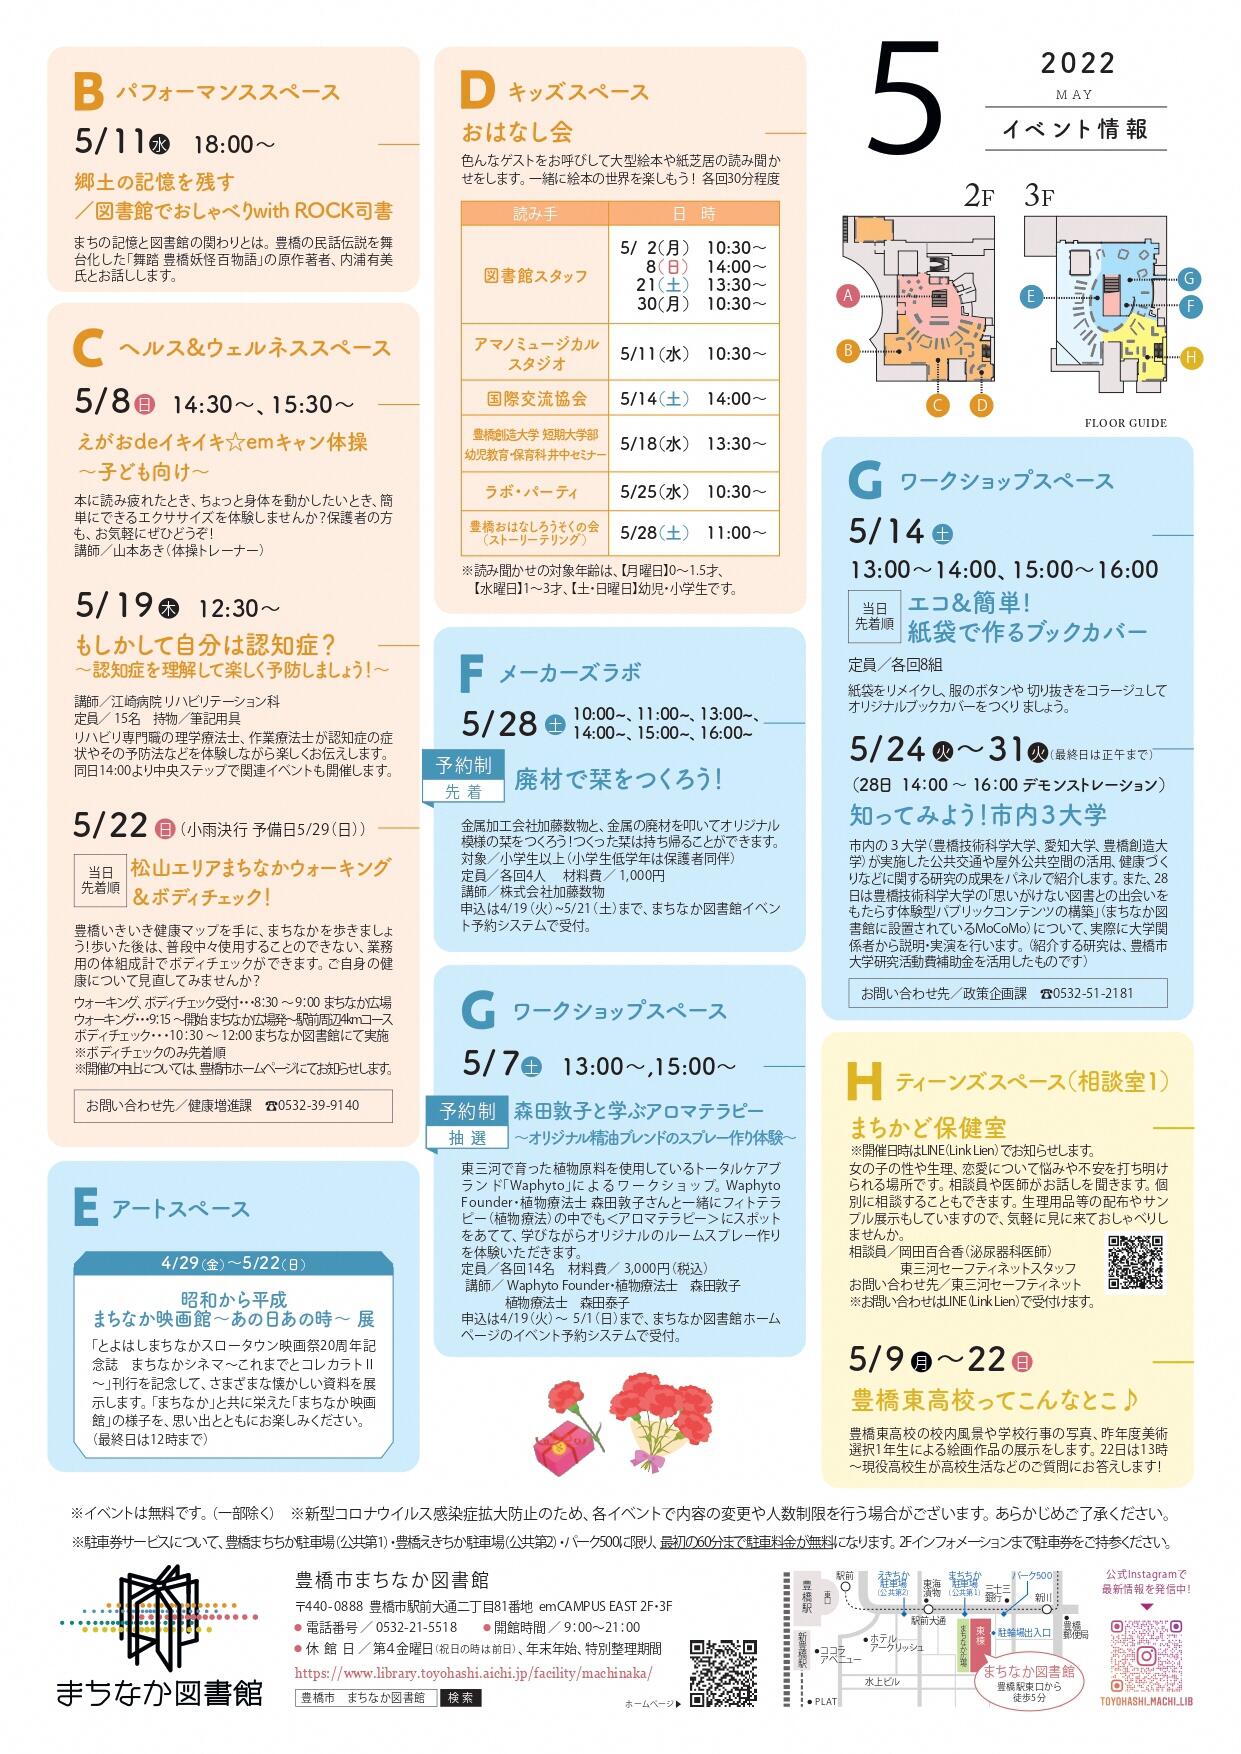 https://www.library.toyohashi.aichi.jp/facility/machinaka/event/27ee24659e3103df8556b8157f7aa49e.jpg